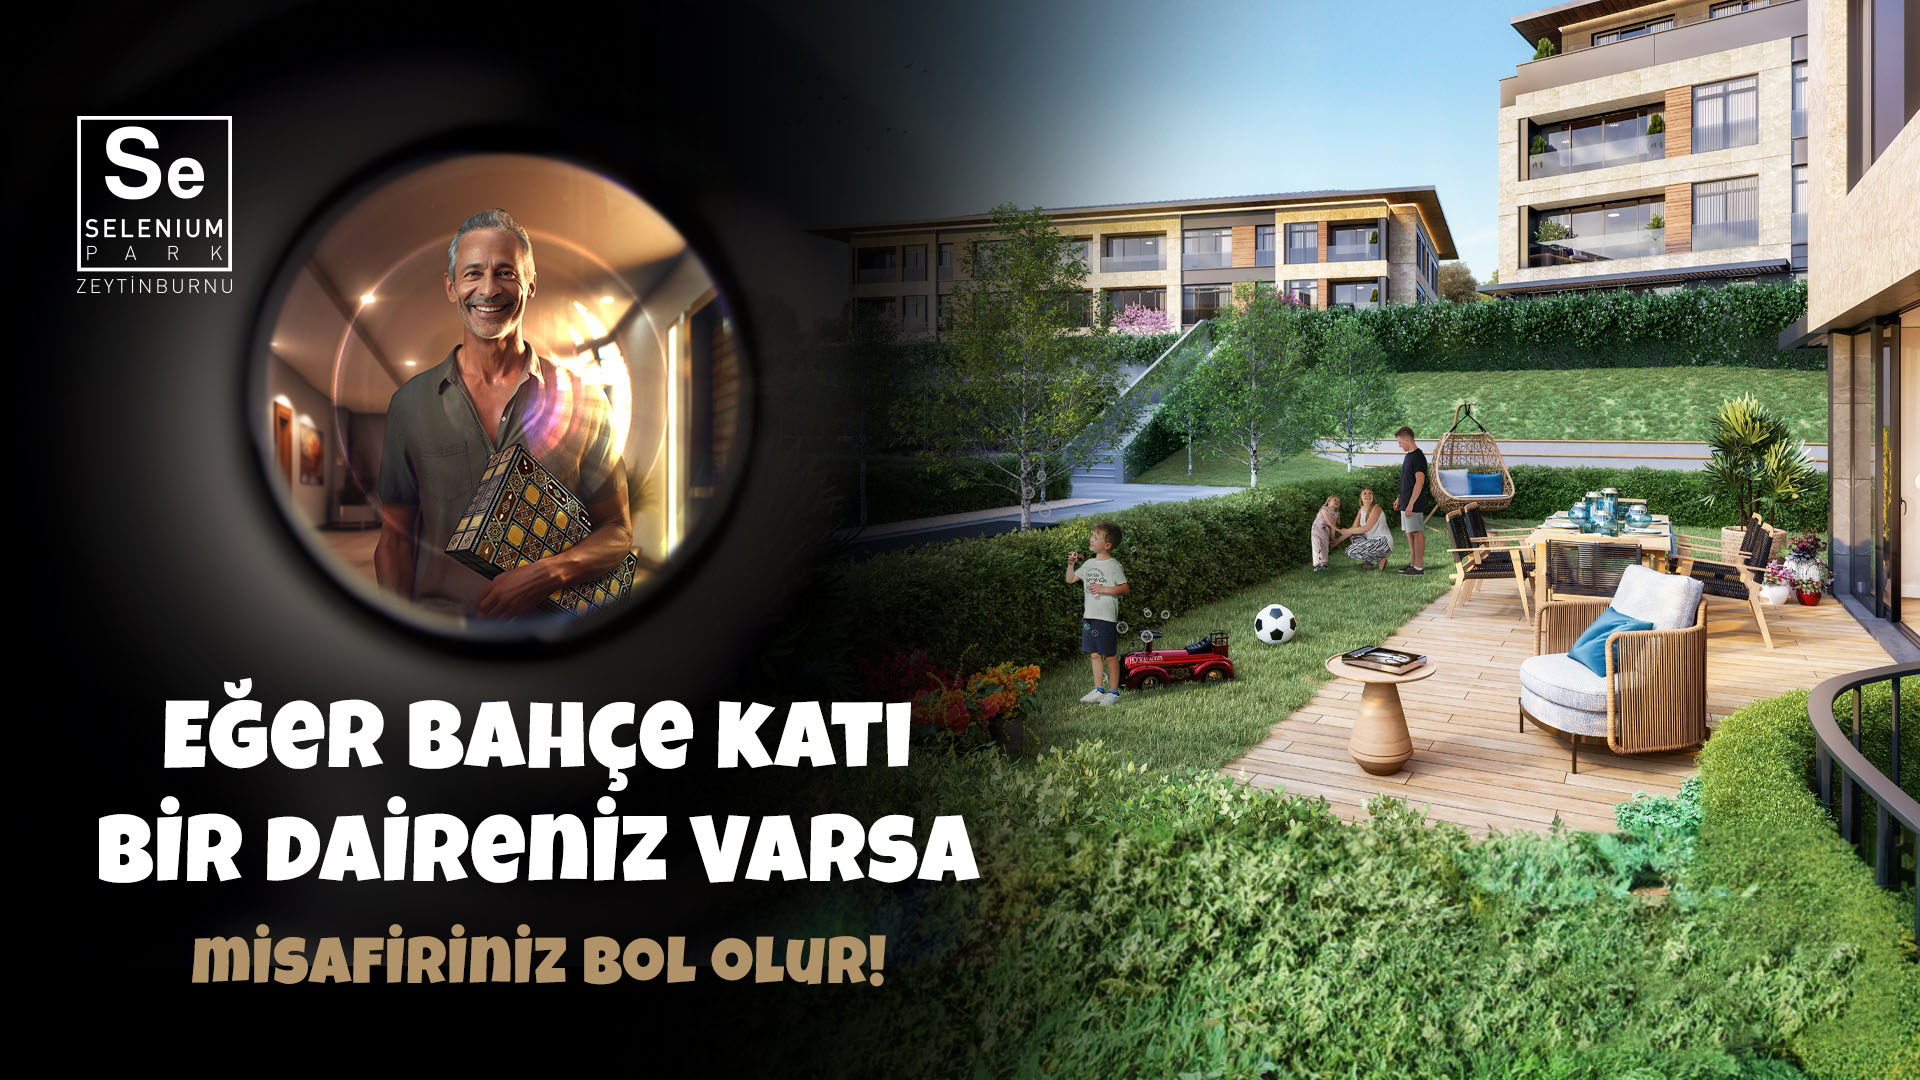 Aşçıoğlu Selenium Park